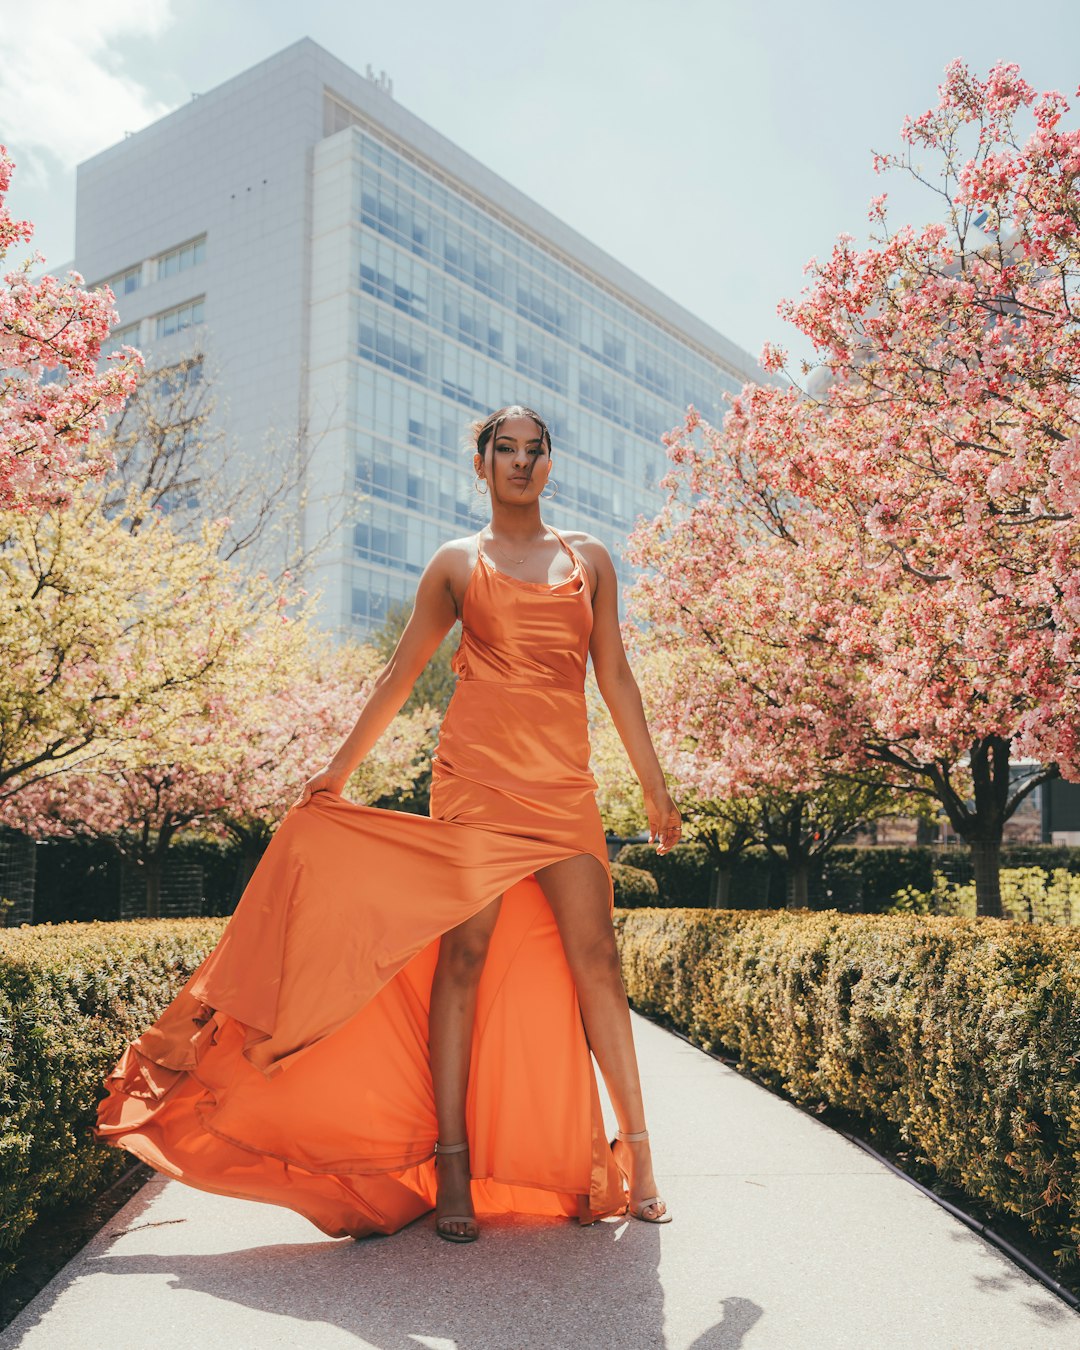 woman in orange sleeveless dress standing on pathway